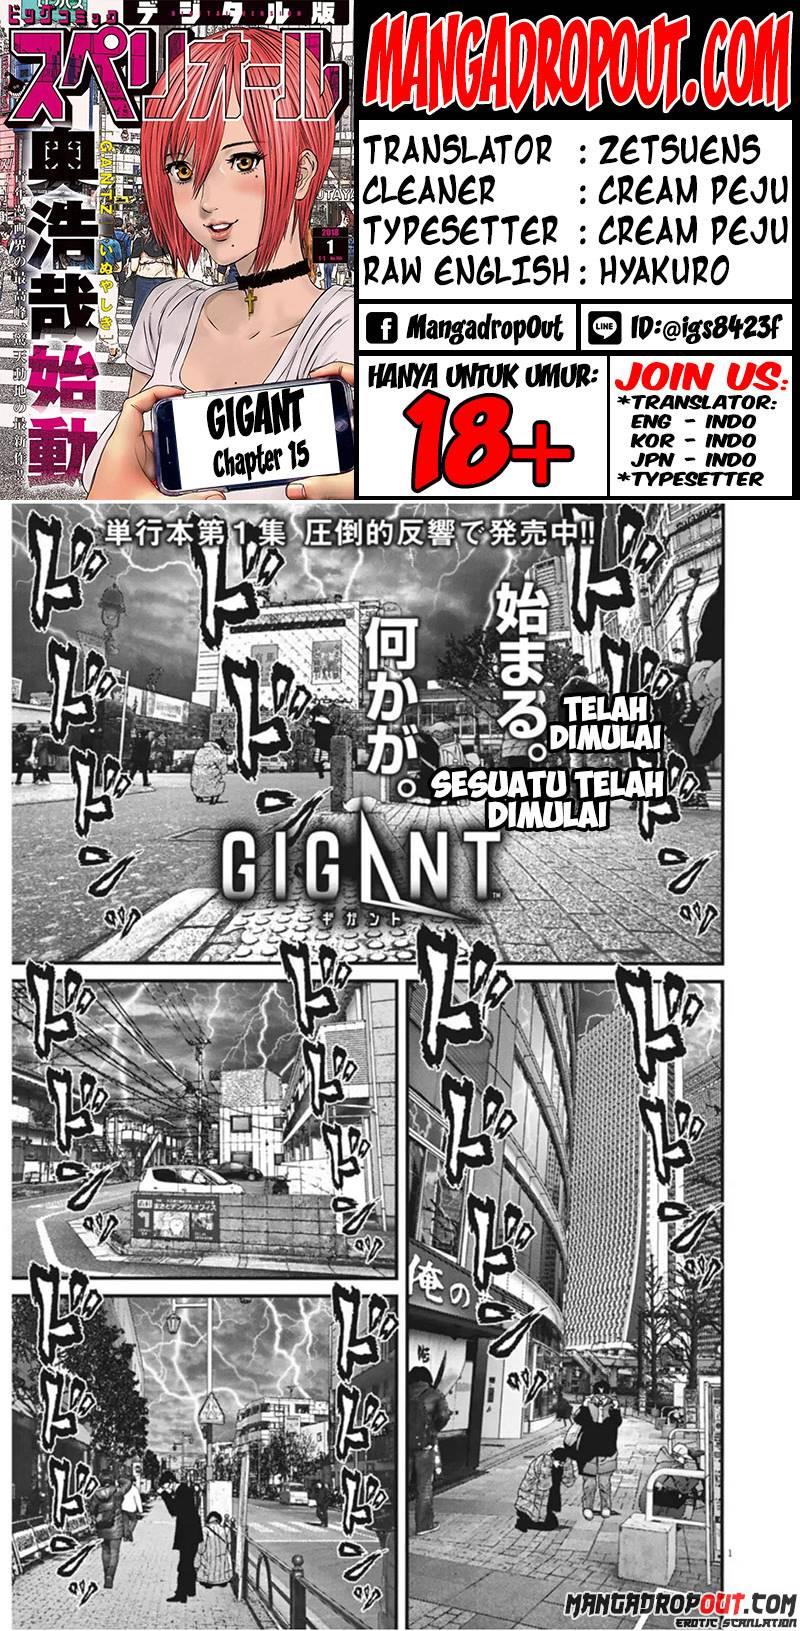 GIGANT Chapter 15